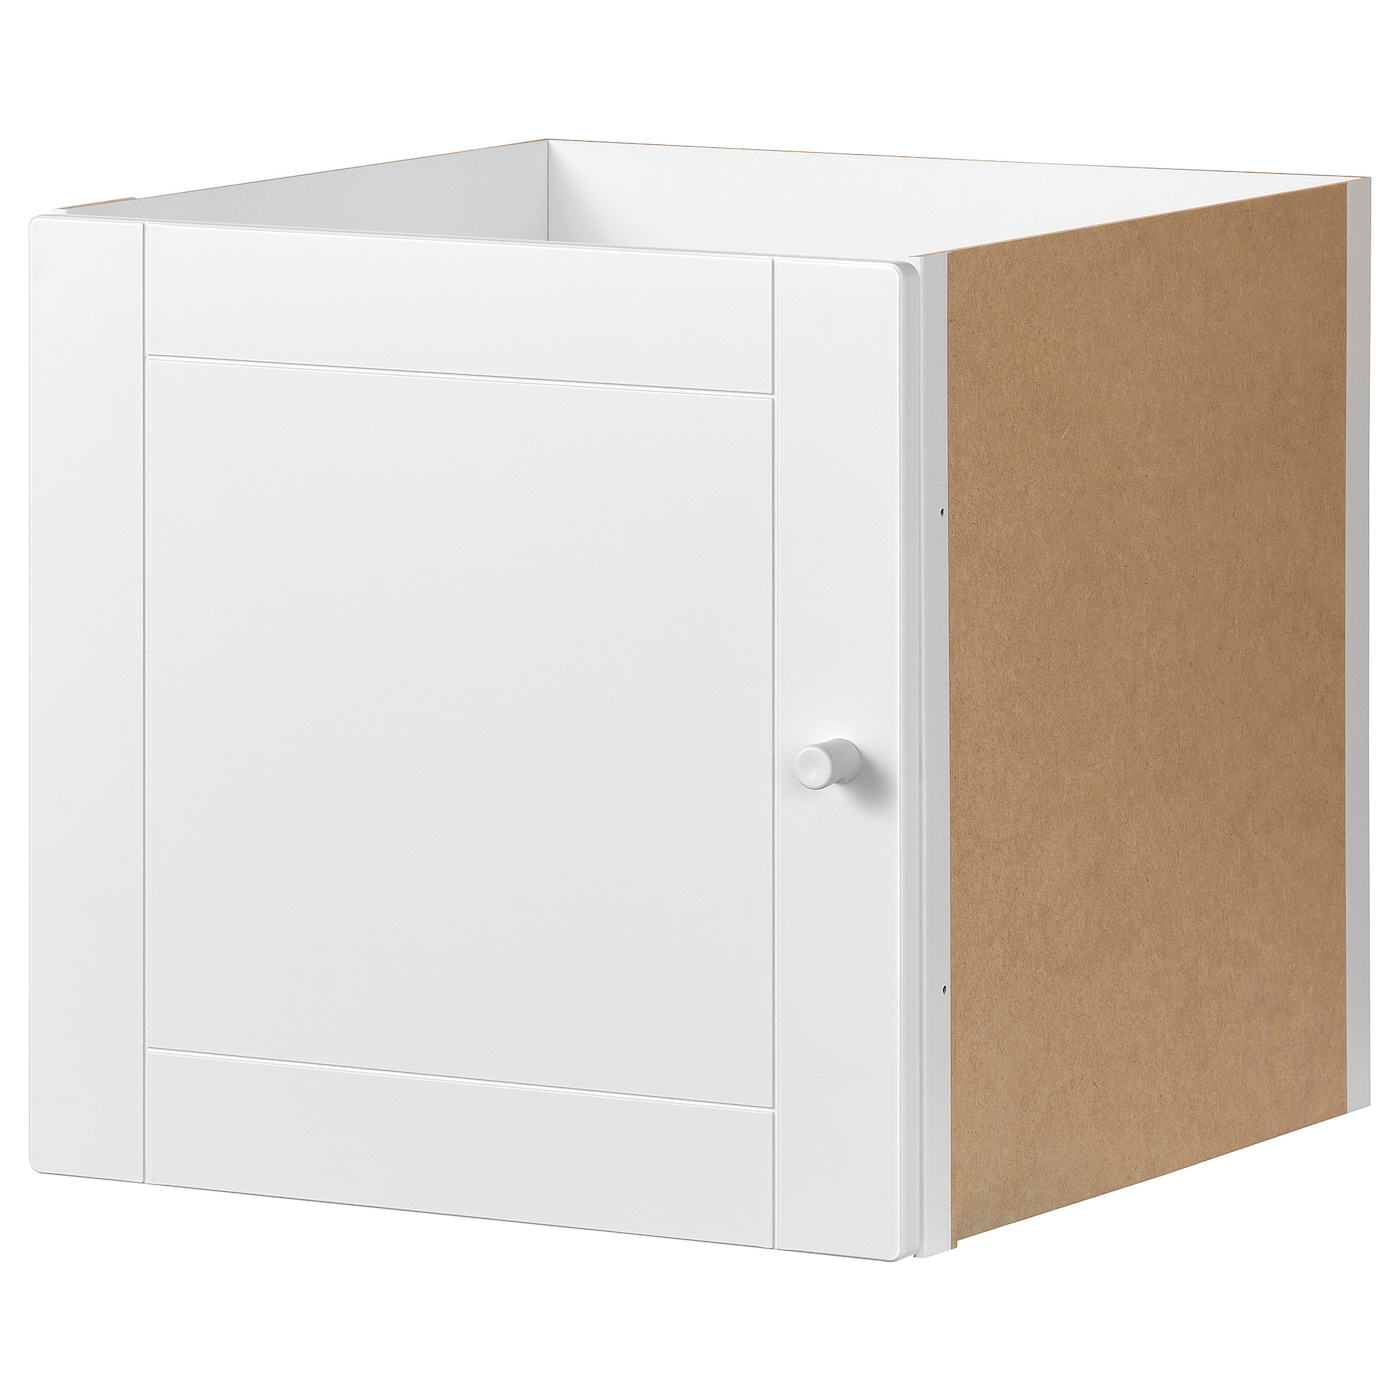 Вставка с дверцей - KALLAX IKEA/КАЛЛАКС ИКЕА, 33х33 см, белый/бежевый